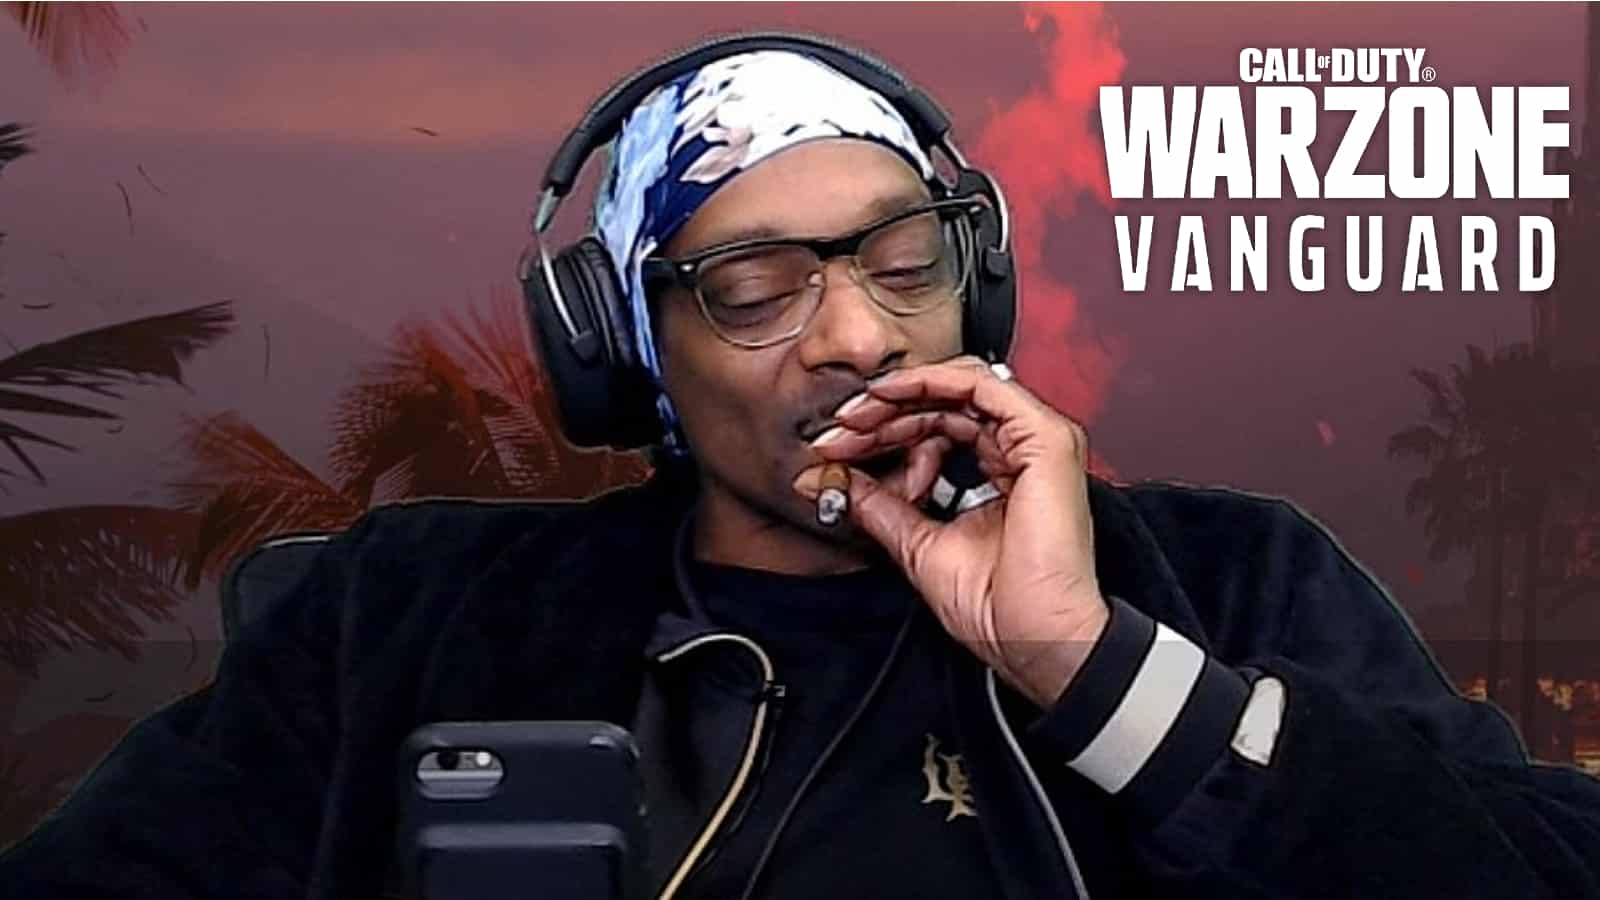 I-Snoop Soog Warzone kanye neVanguard